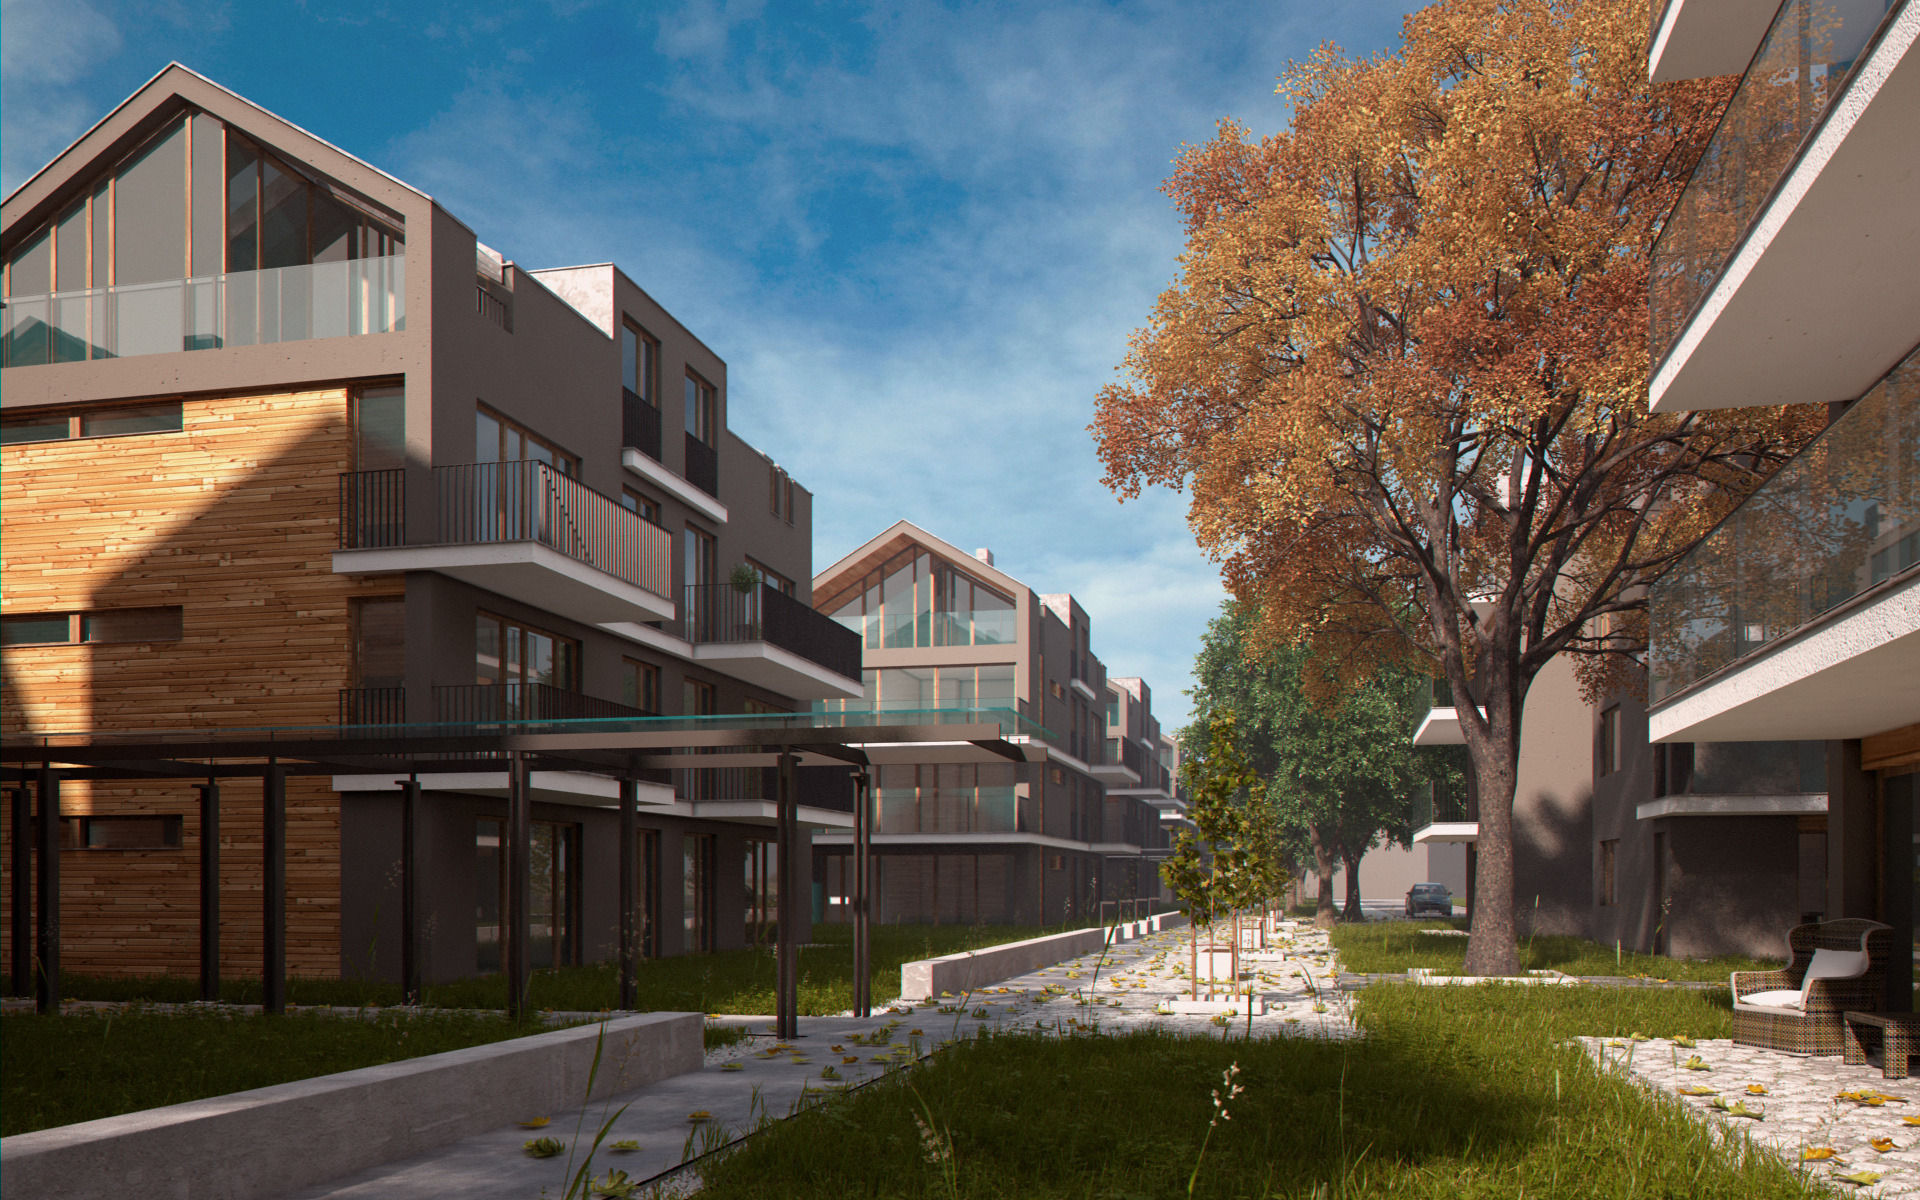 Apartments Development Complex Urban Scene for V-Ray 3D model MAX DWG